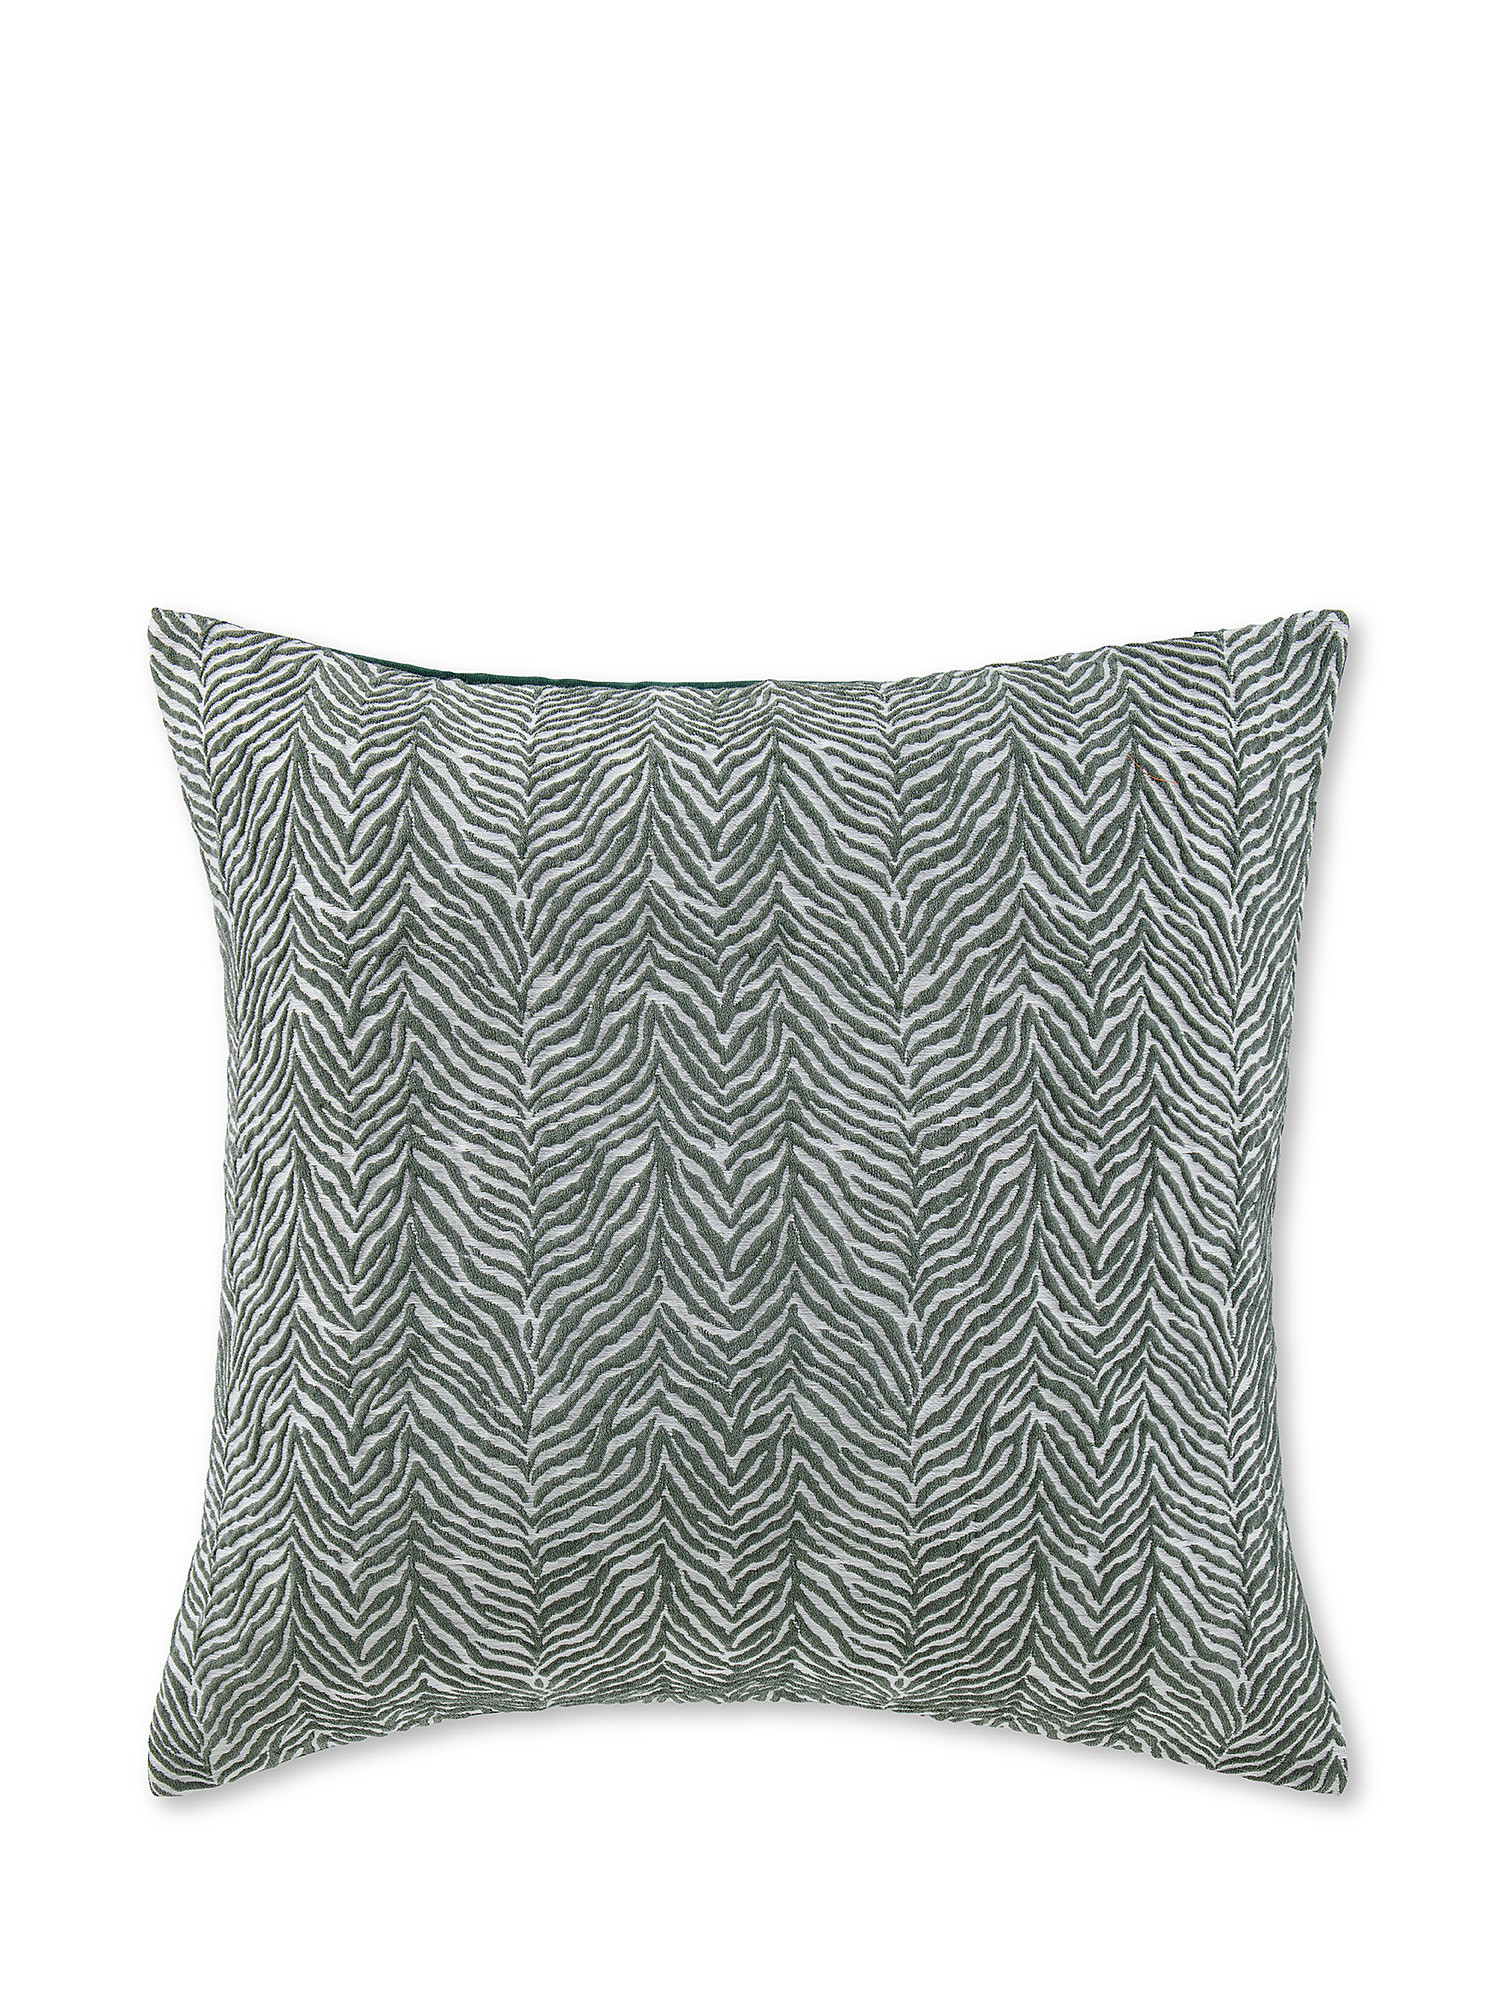 Jacquard cushion with zebra motif 50x50cm, Green, large image number 0